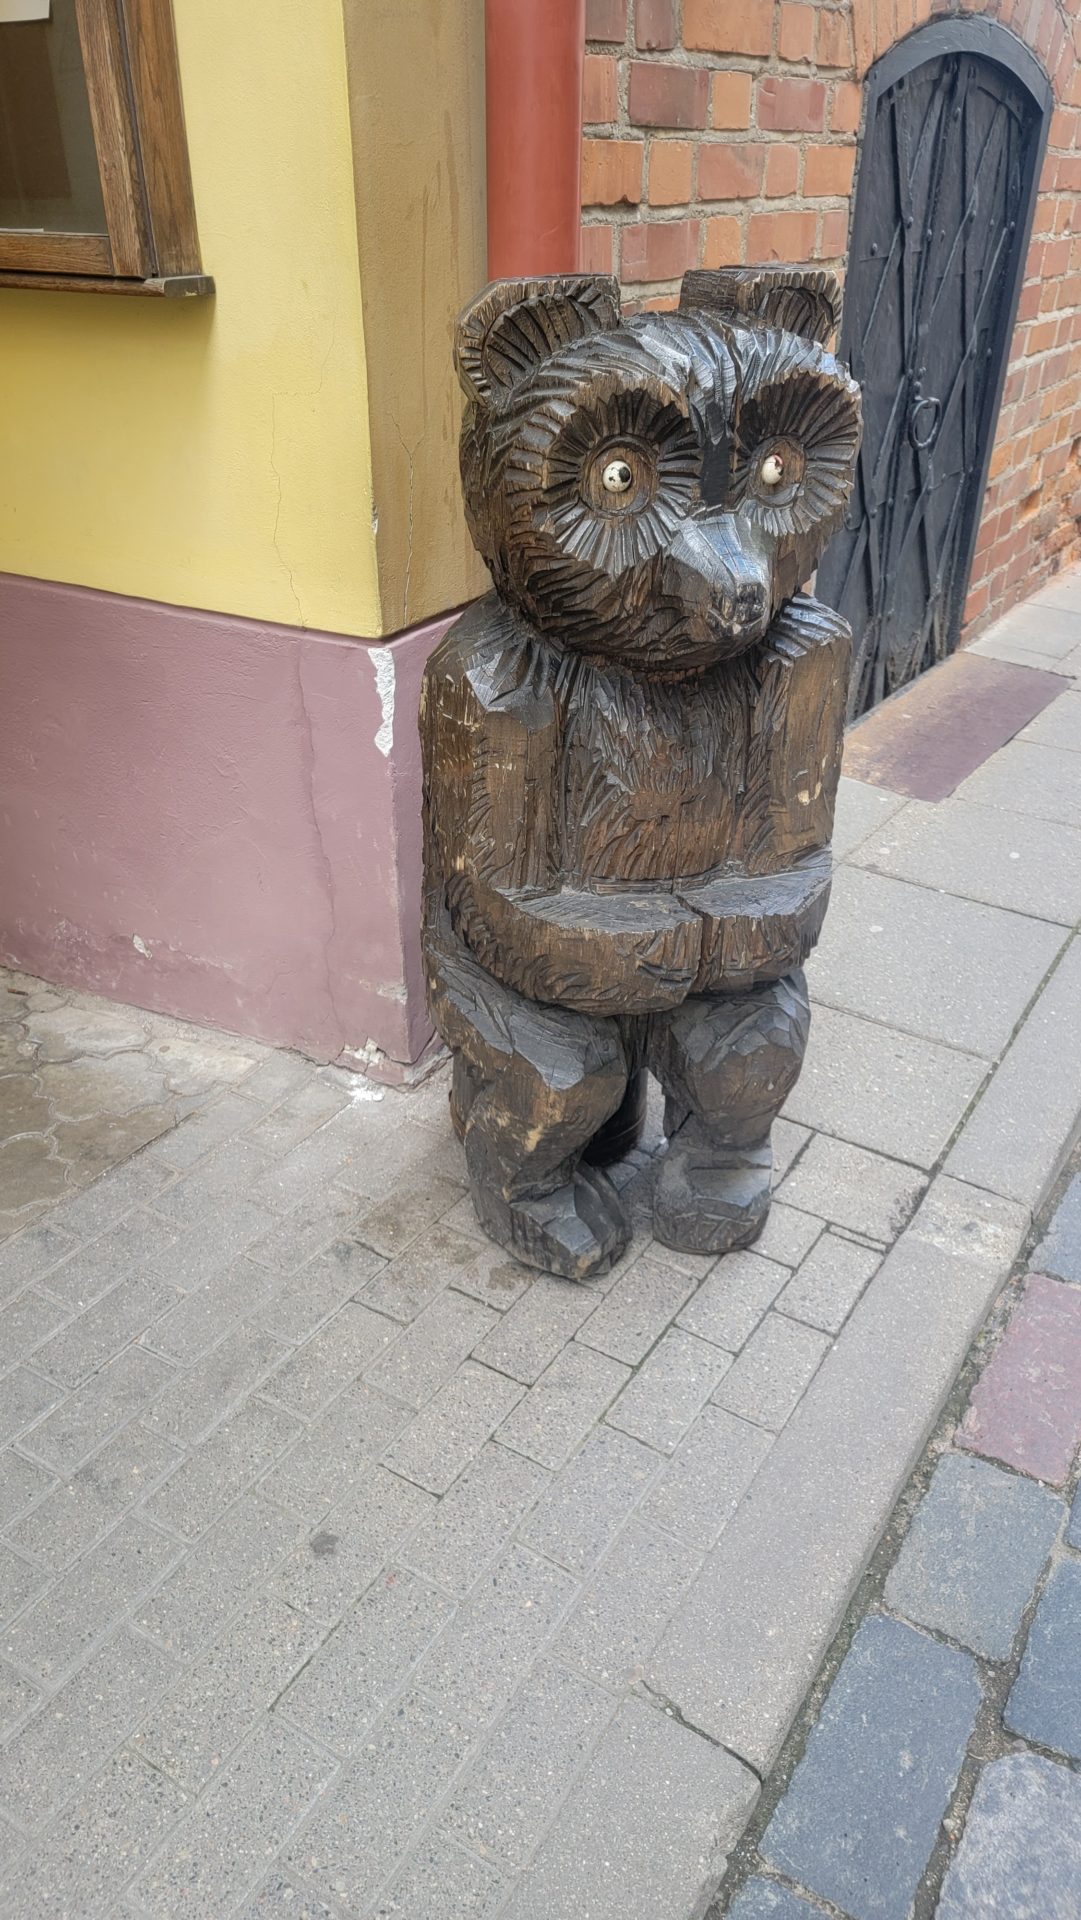 a wooden statue of a bear